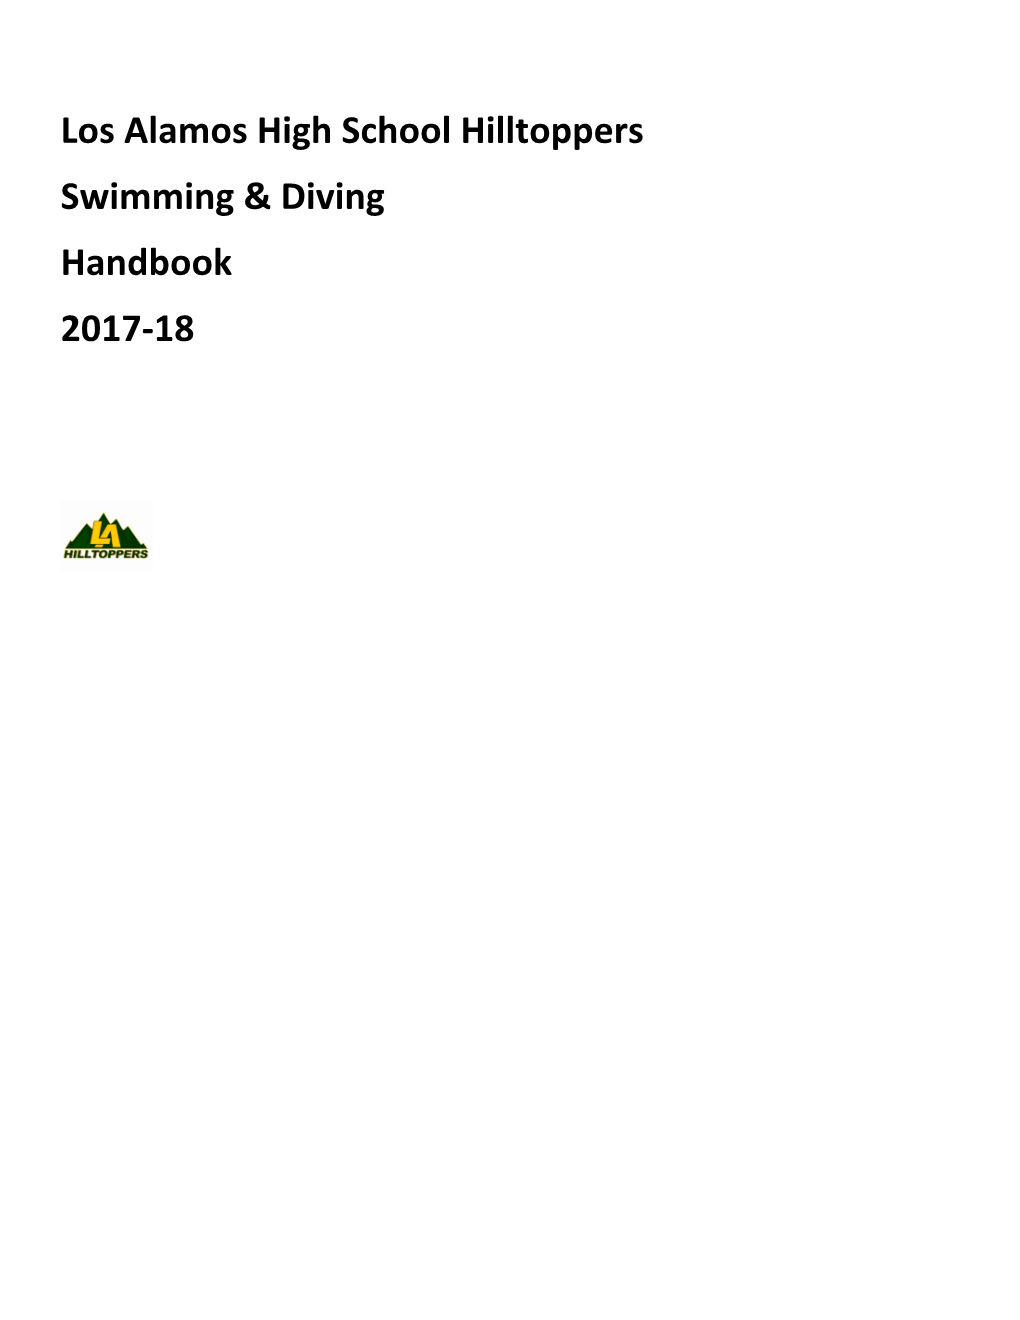 LAHS Swimming&Diving Team Handbook 2017-18 V3